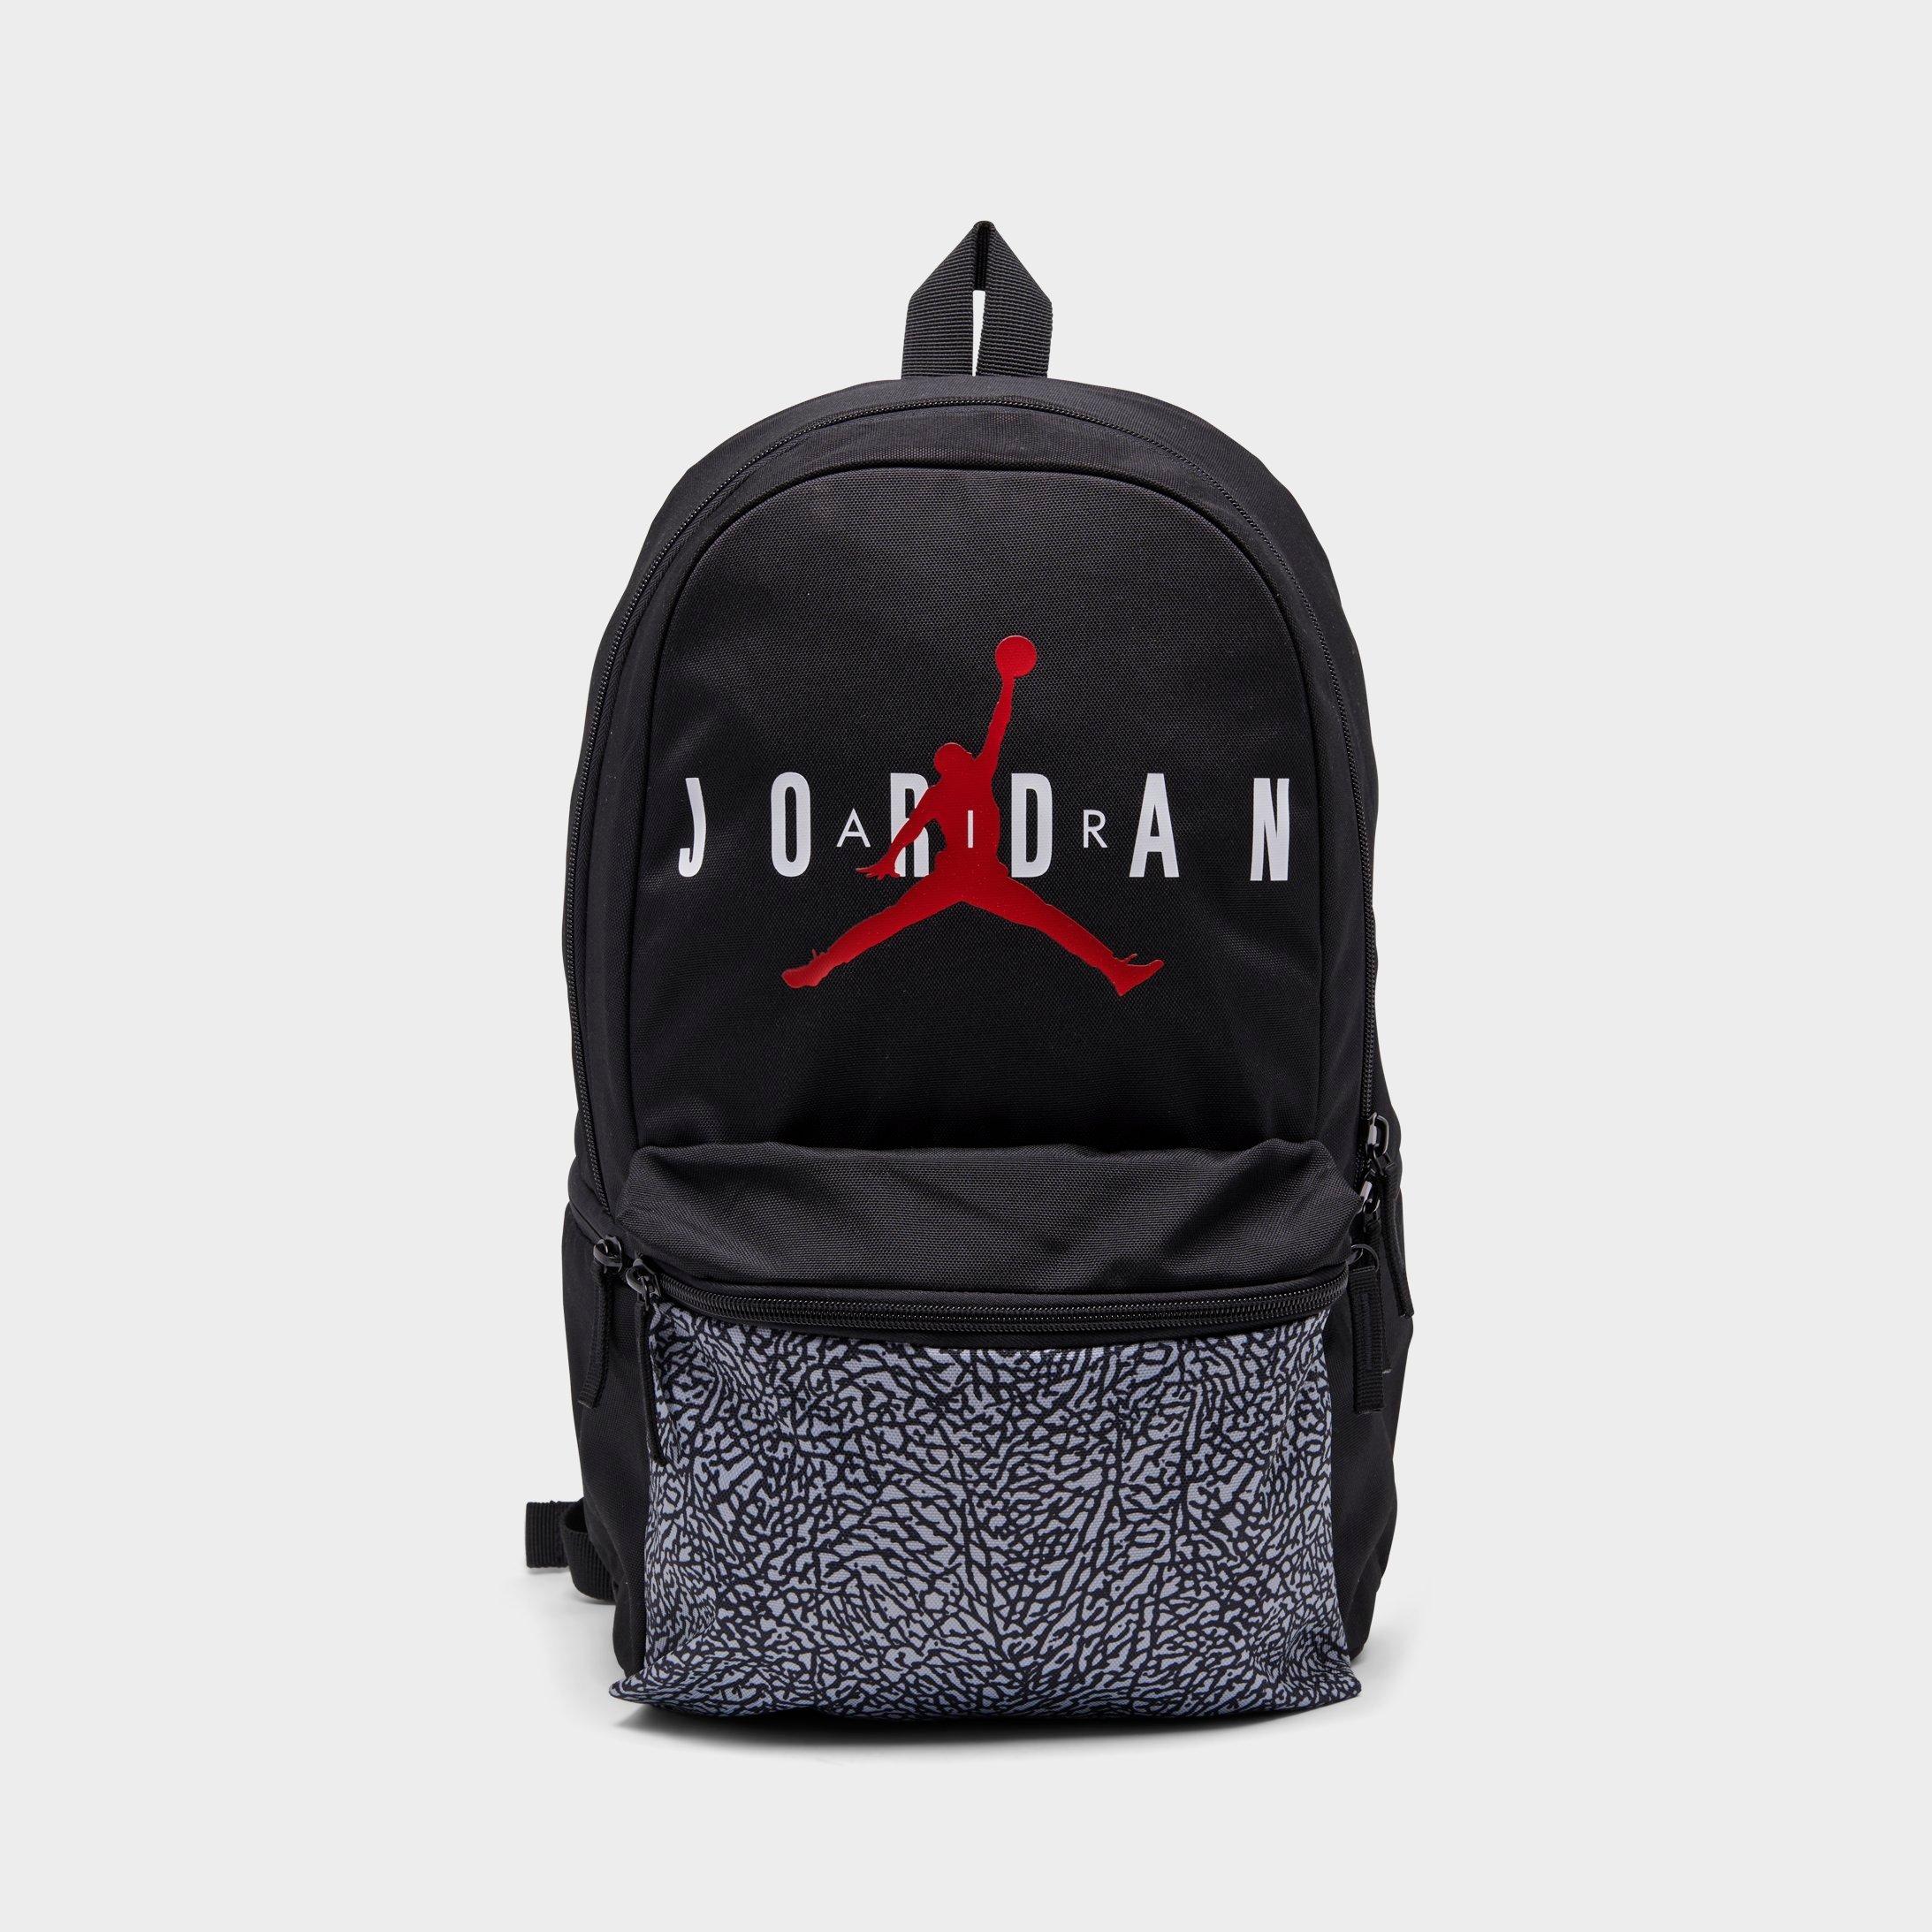 finish line jordan backpack